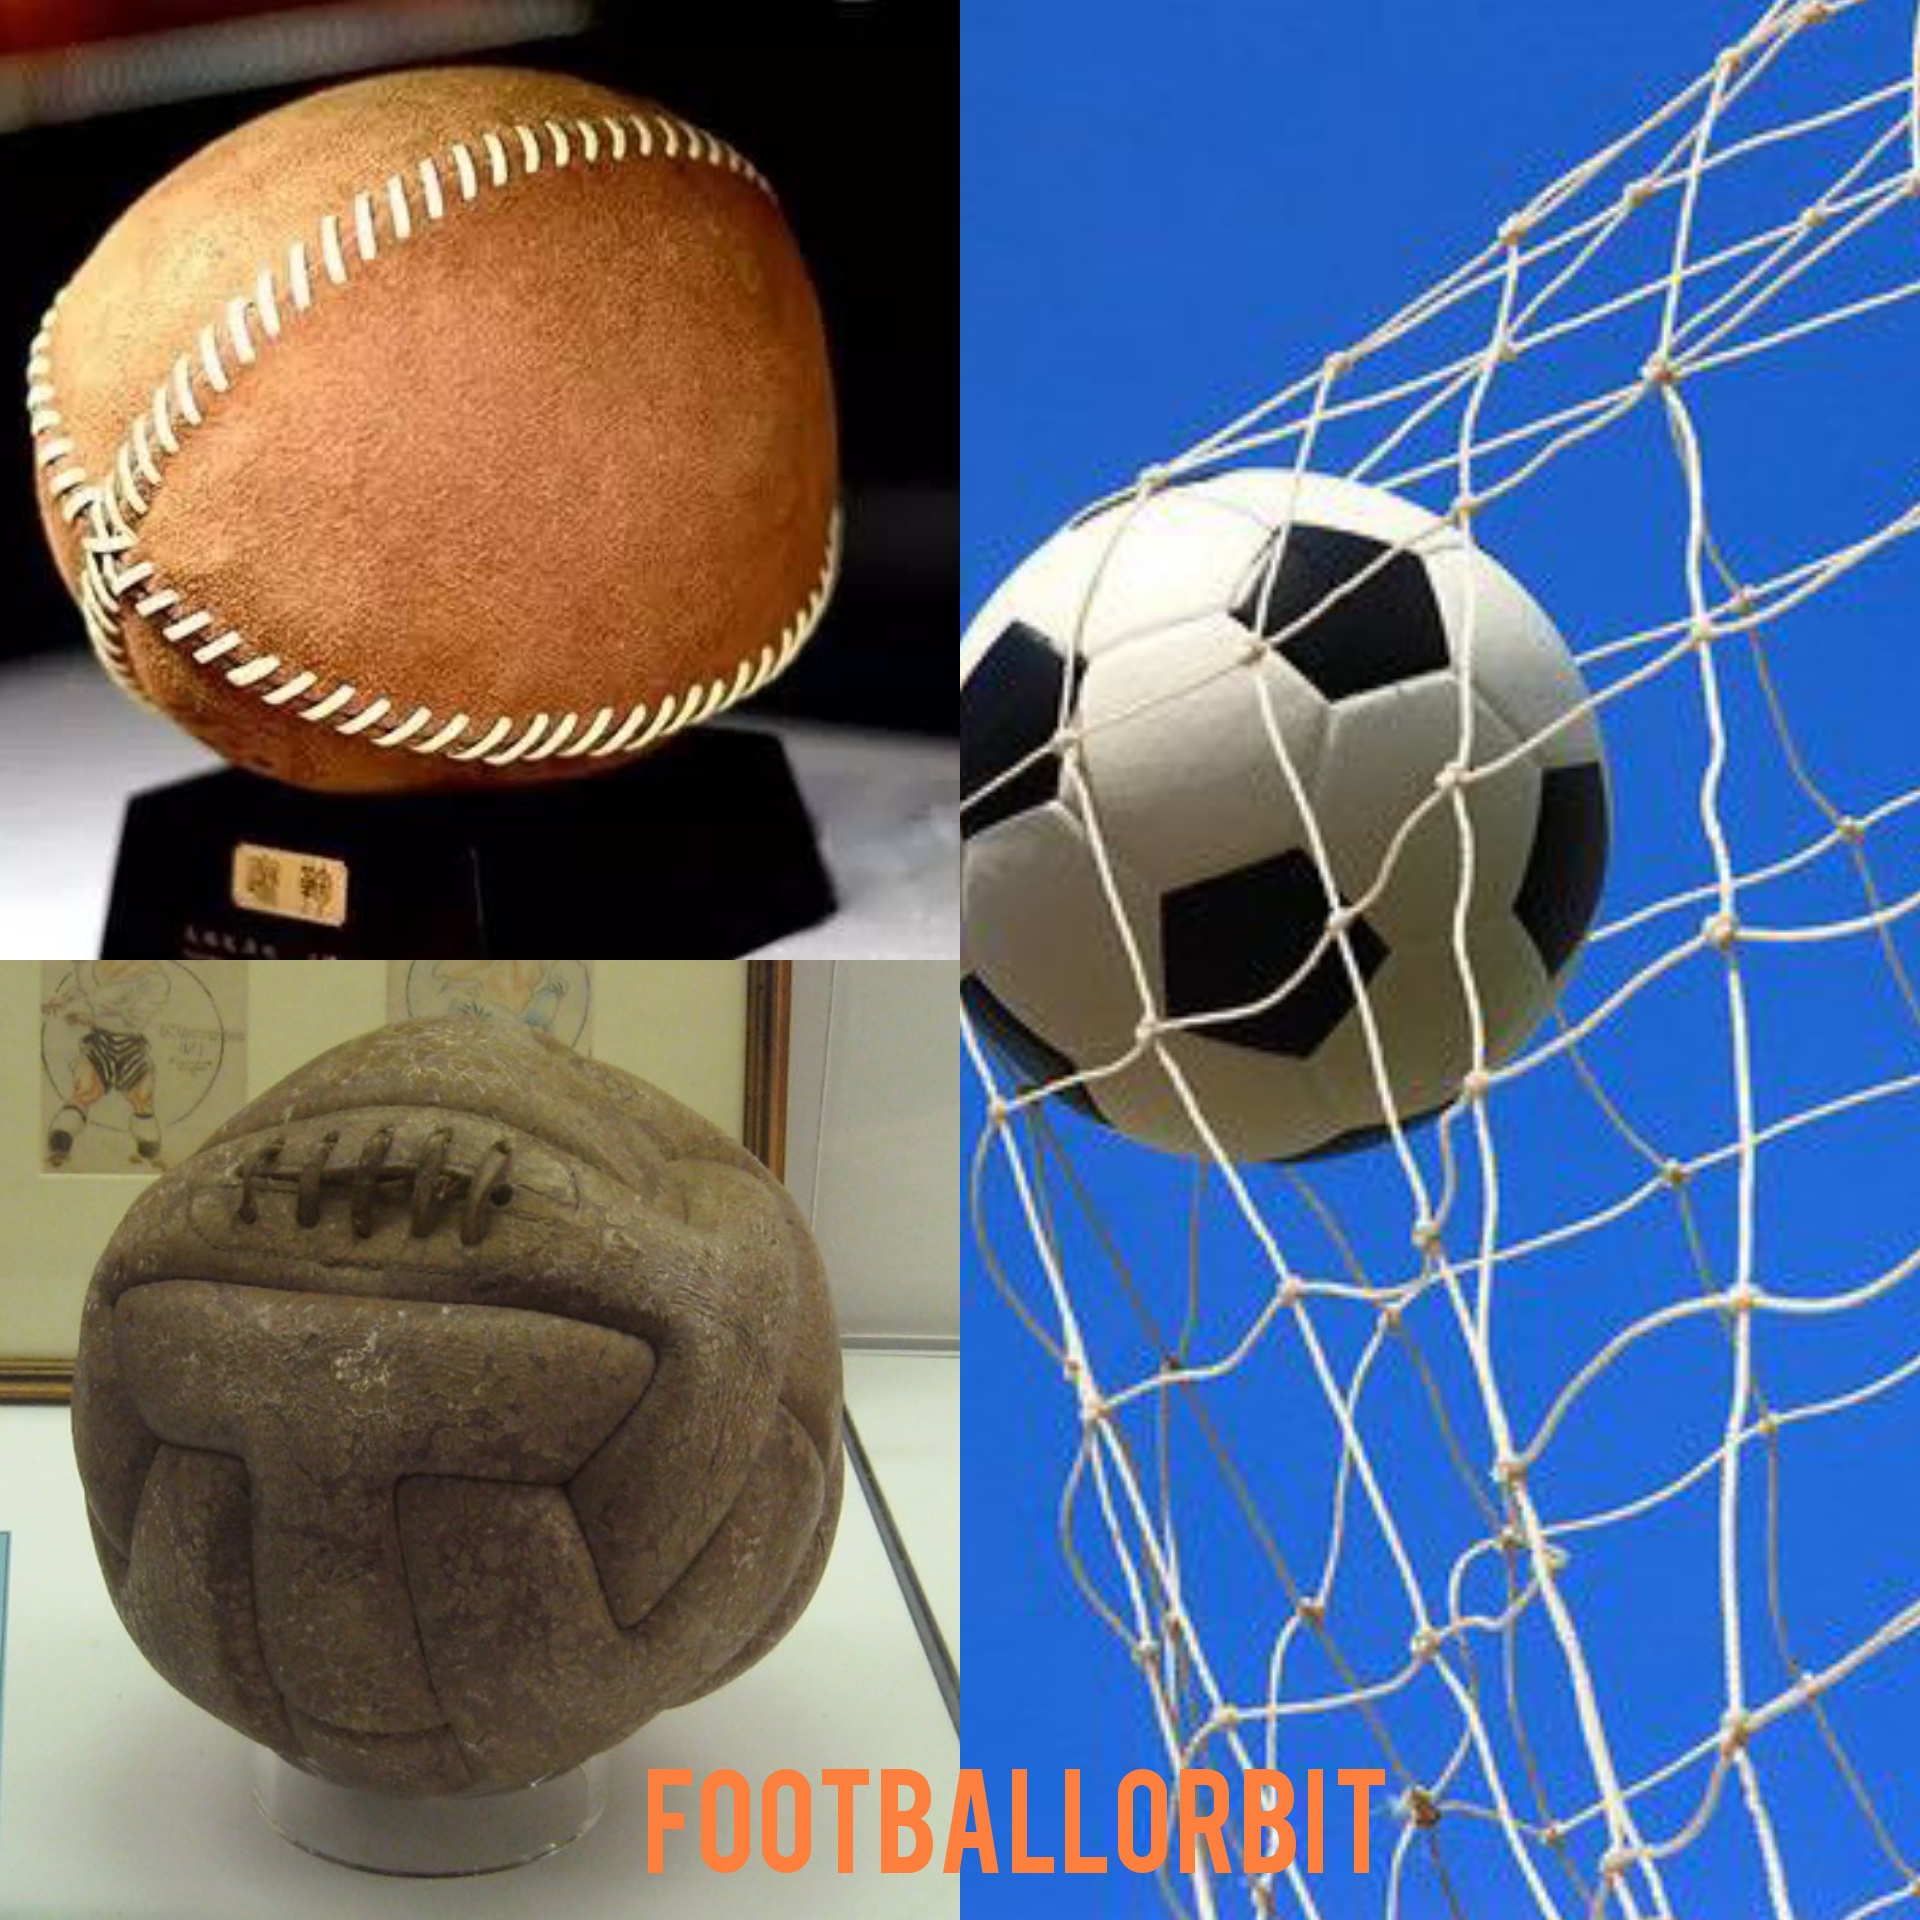 The Origin Of Football (Soccer)